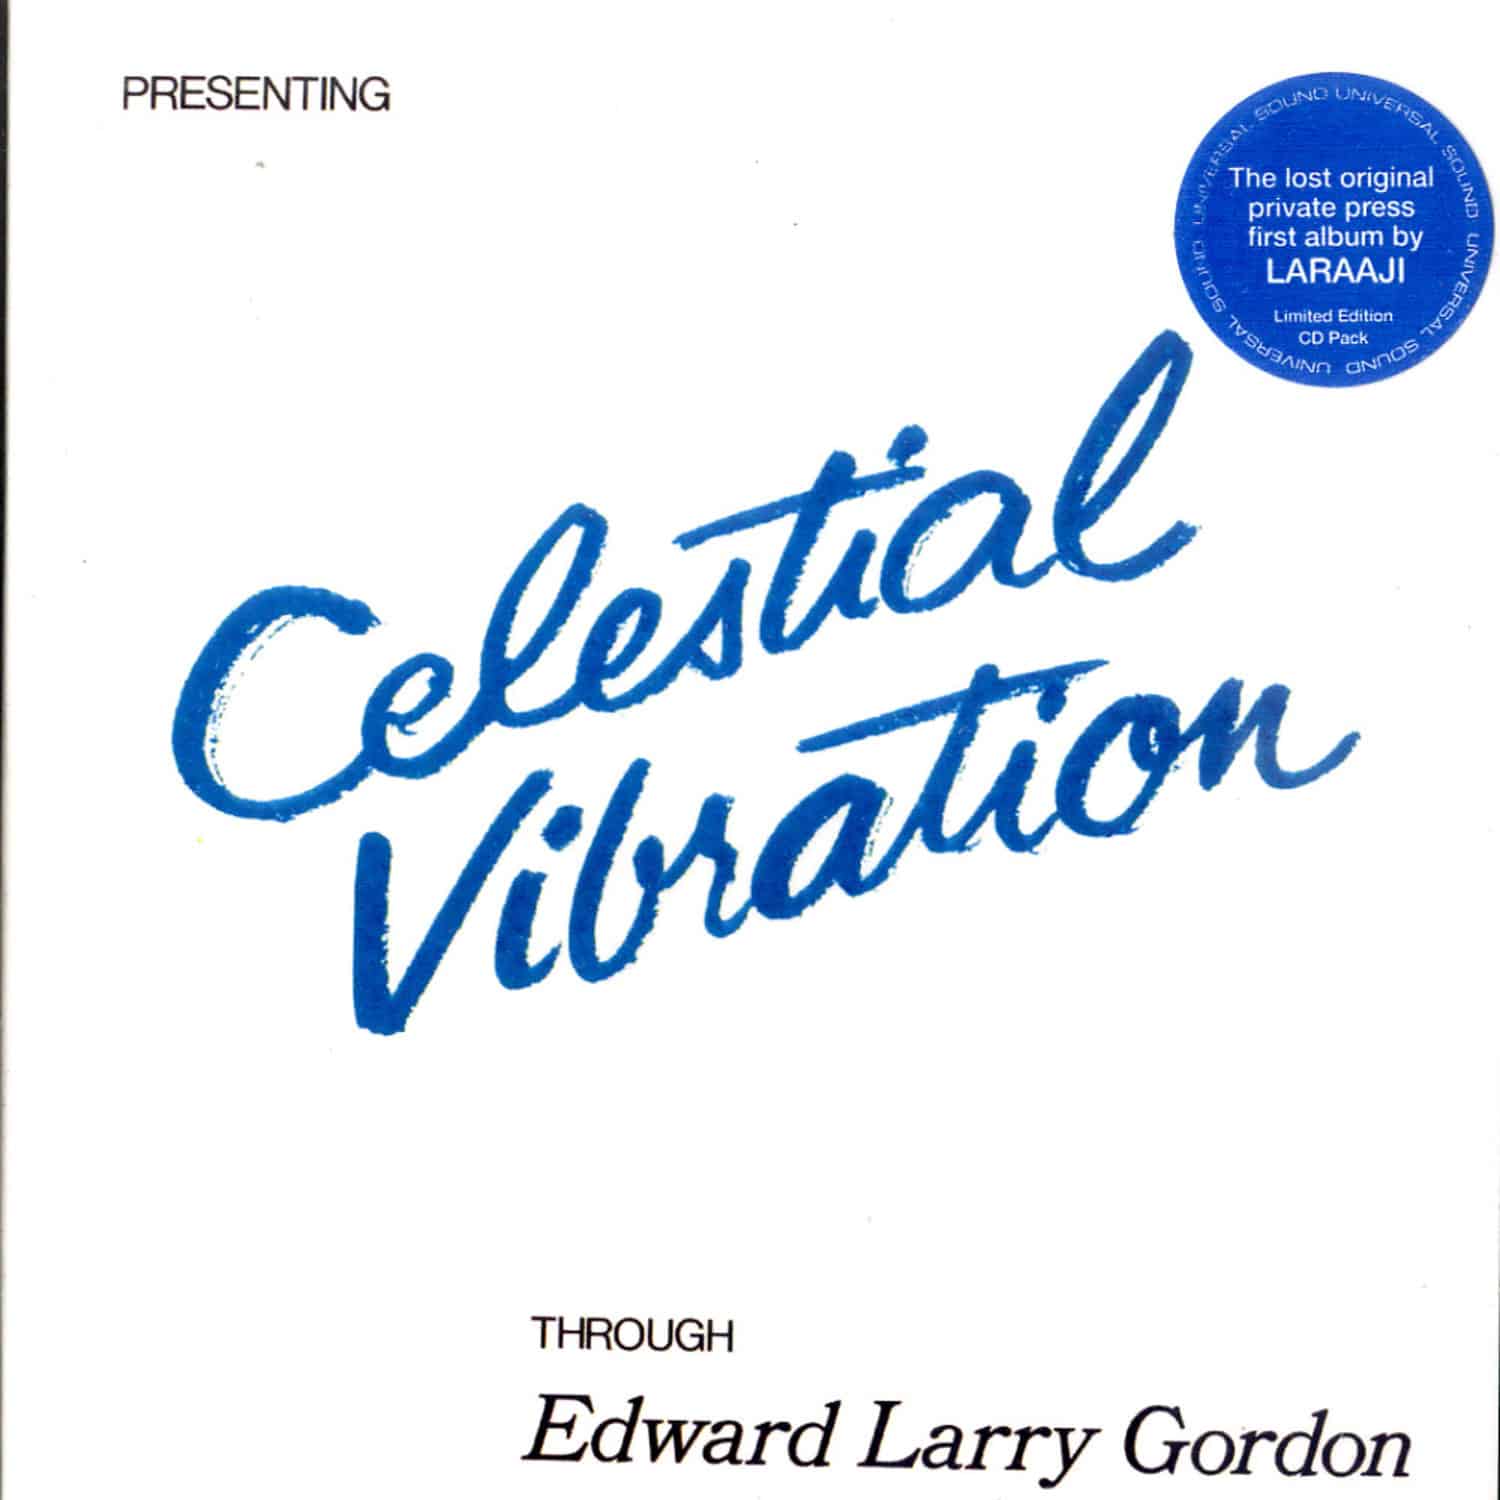 Edward Larry Gordon - CELESTIAL VIBRATION 